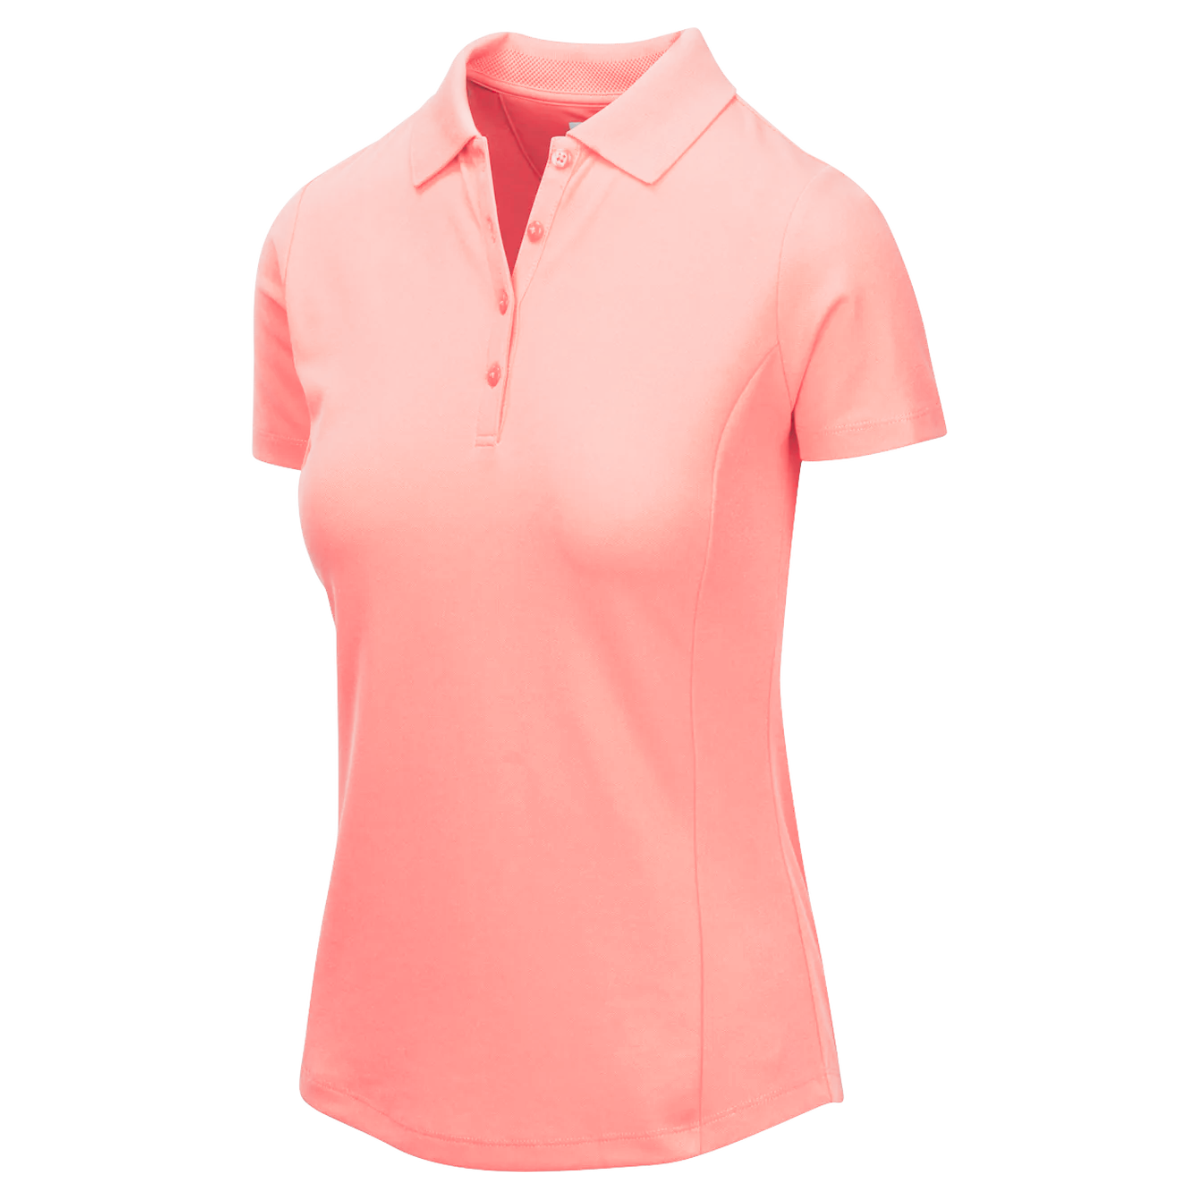 Greg Norman Women's Play Dry Polo Tshirt (US Size)